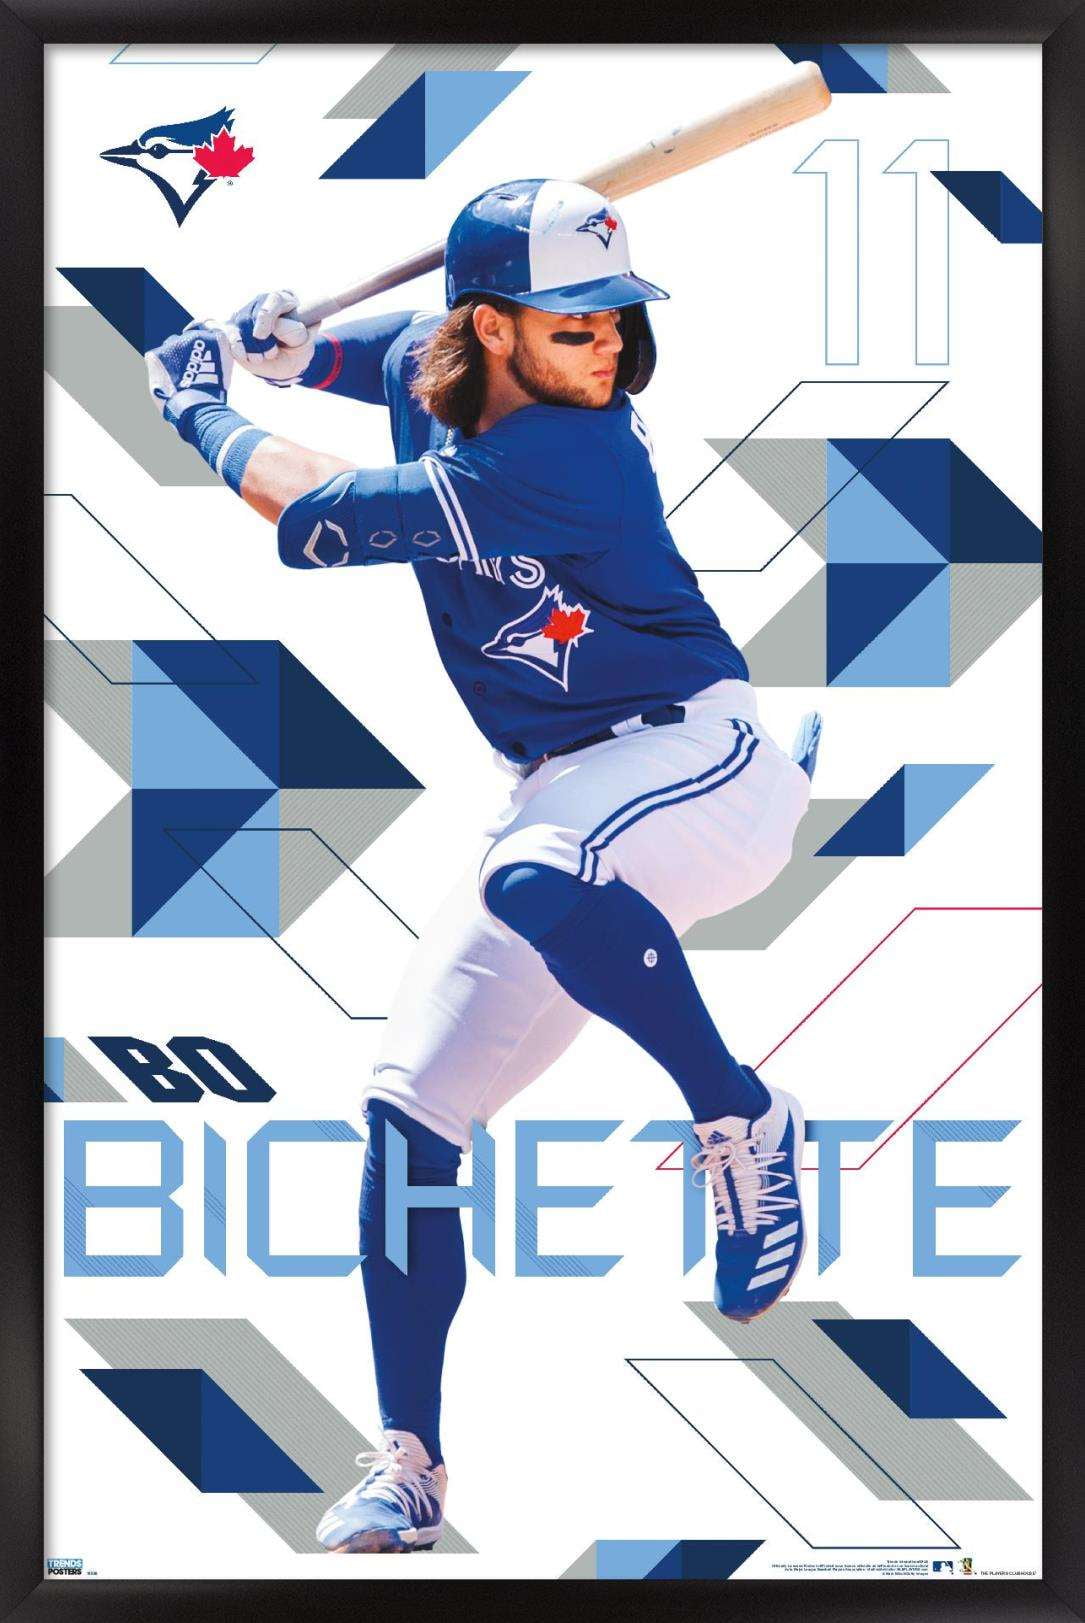 MLB Toronto Blue Jays - Bo Bichette Wall Poster, 22.375 x 34, Framed 